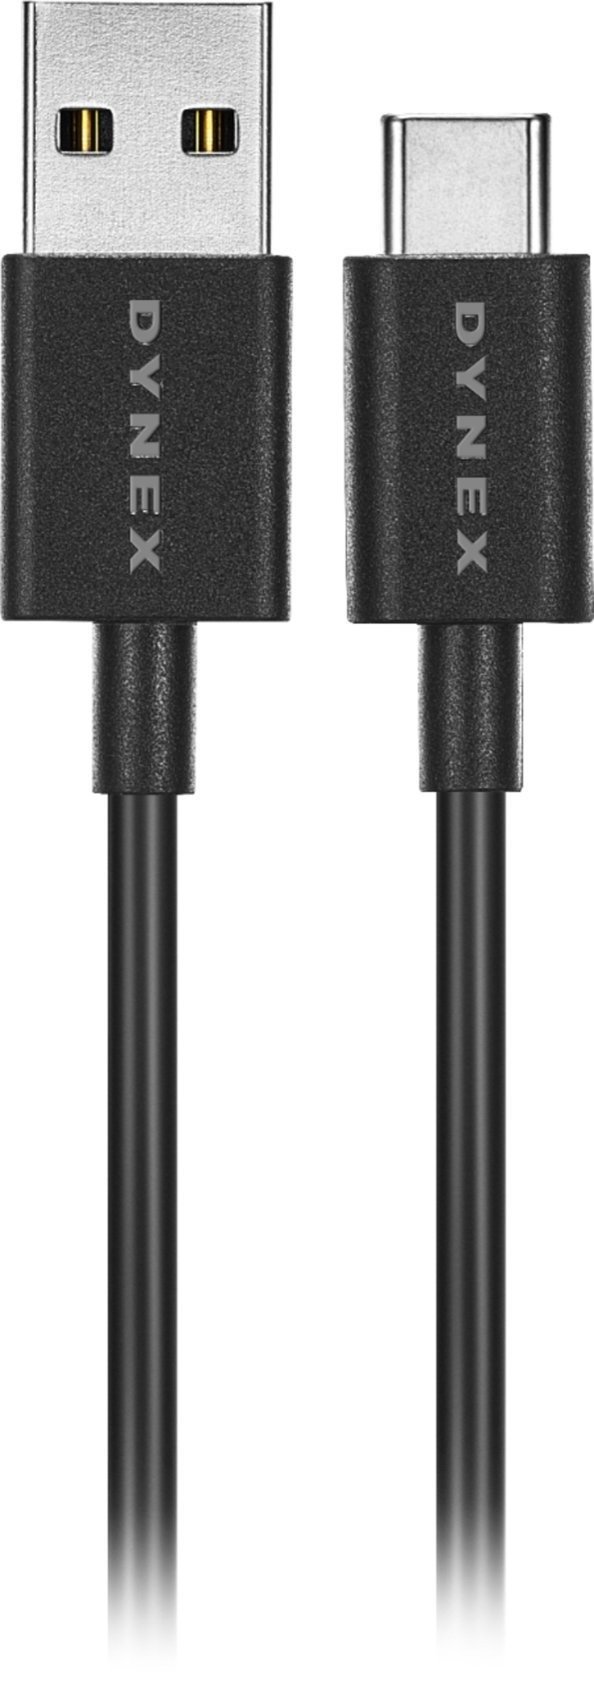 Dynex 3' USB Type C到Type A 数据线 两条装